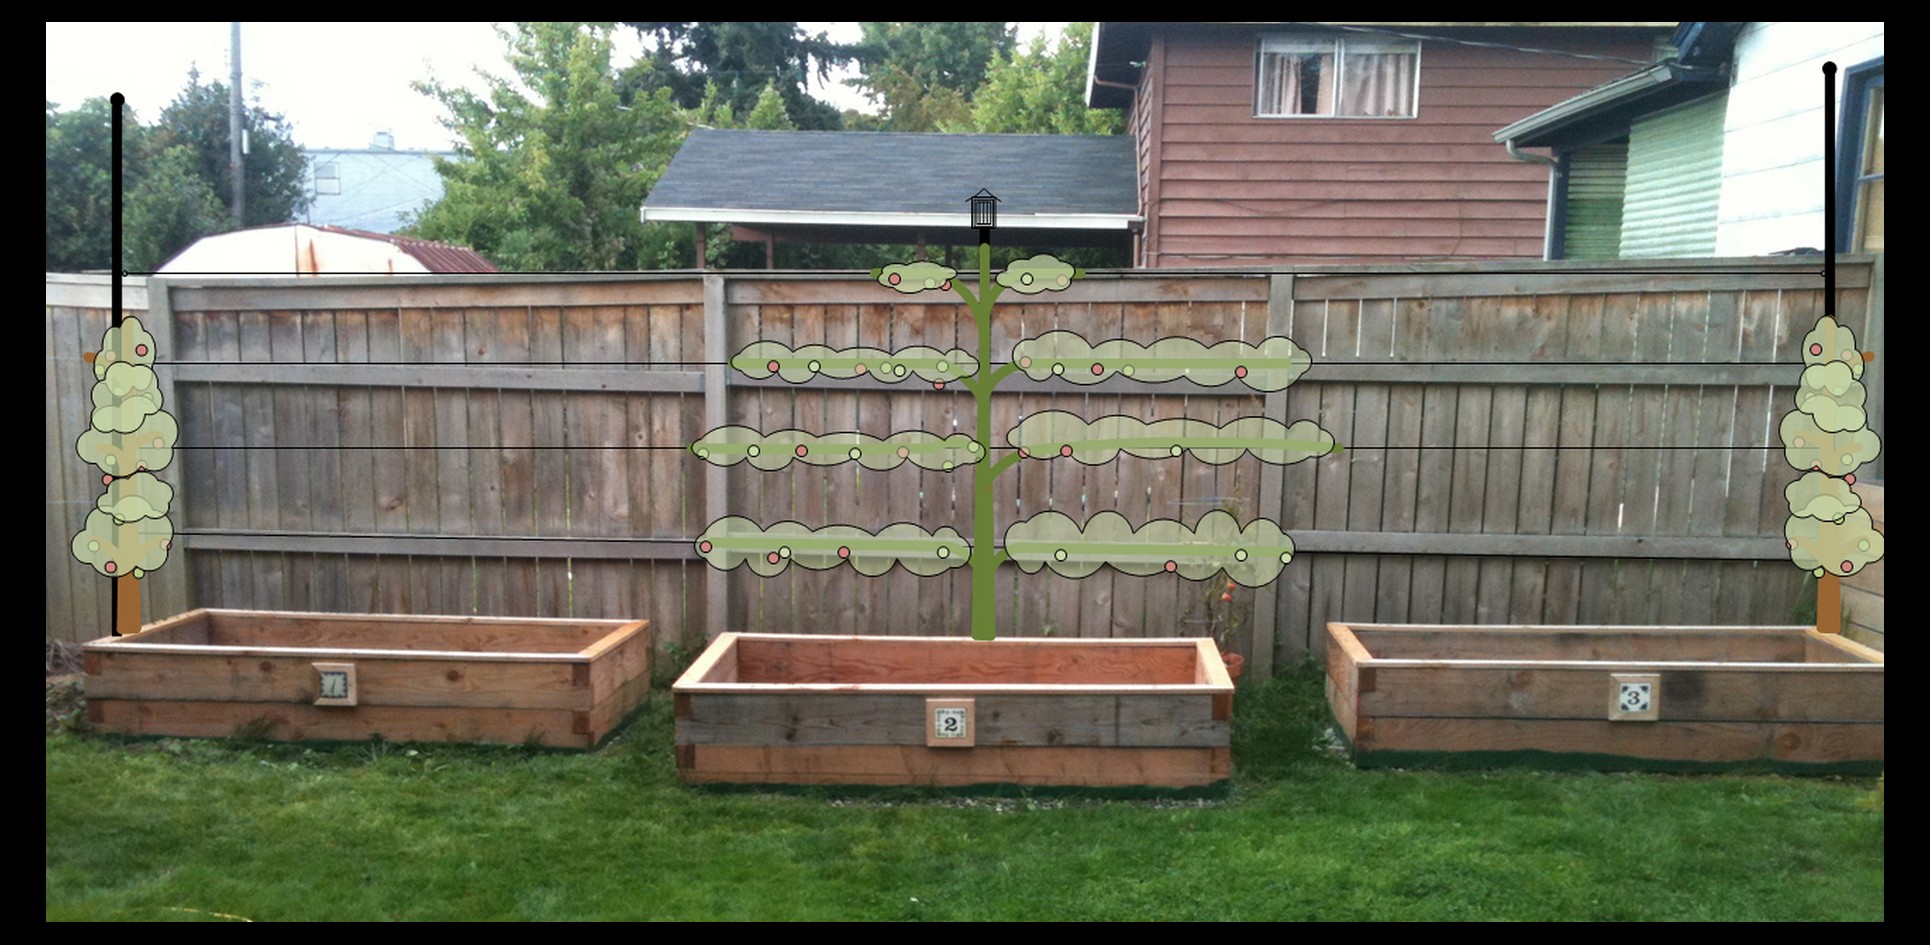 Above Ground Garden Box Ideas Photograph | Build A Platform